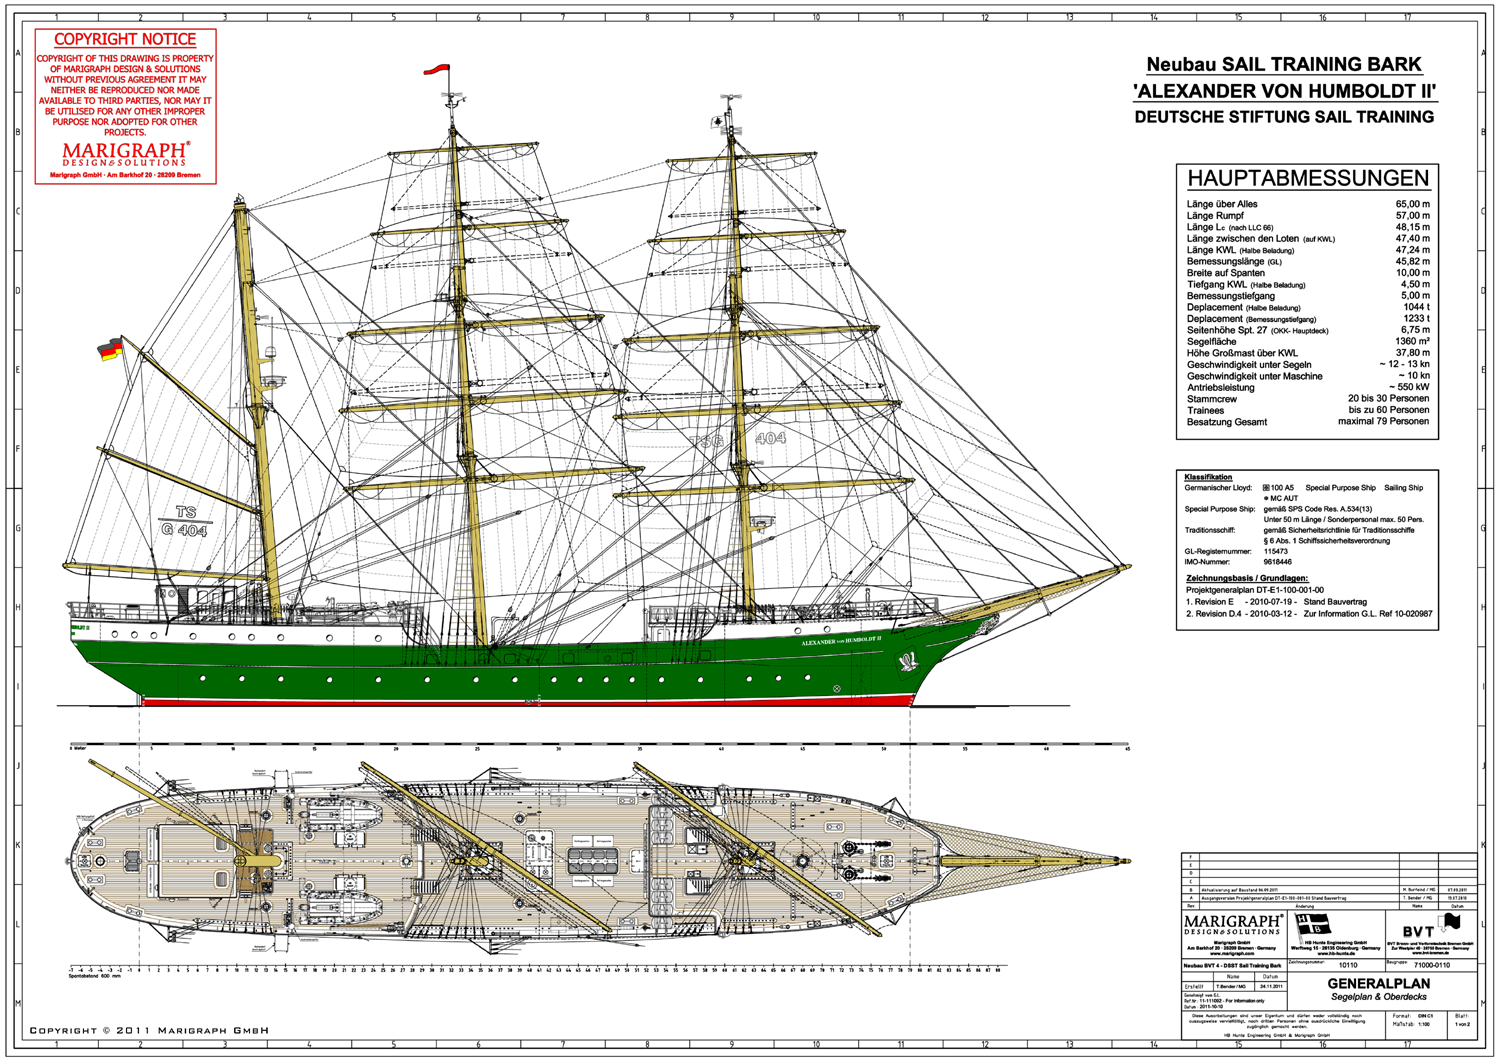 Design - Sailing vessels